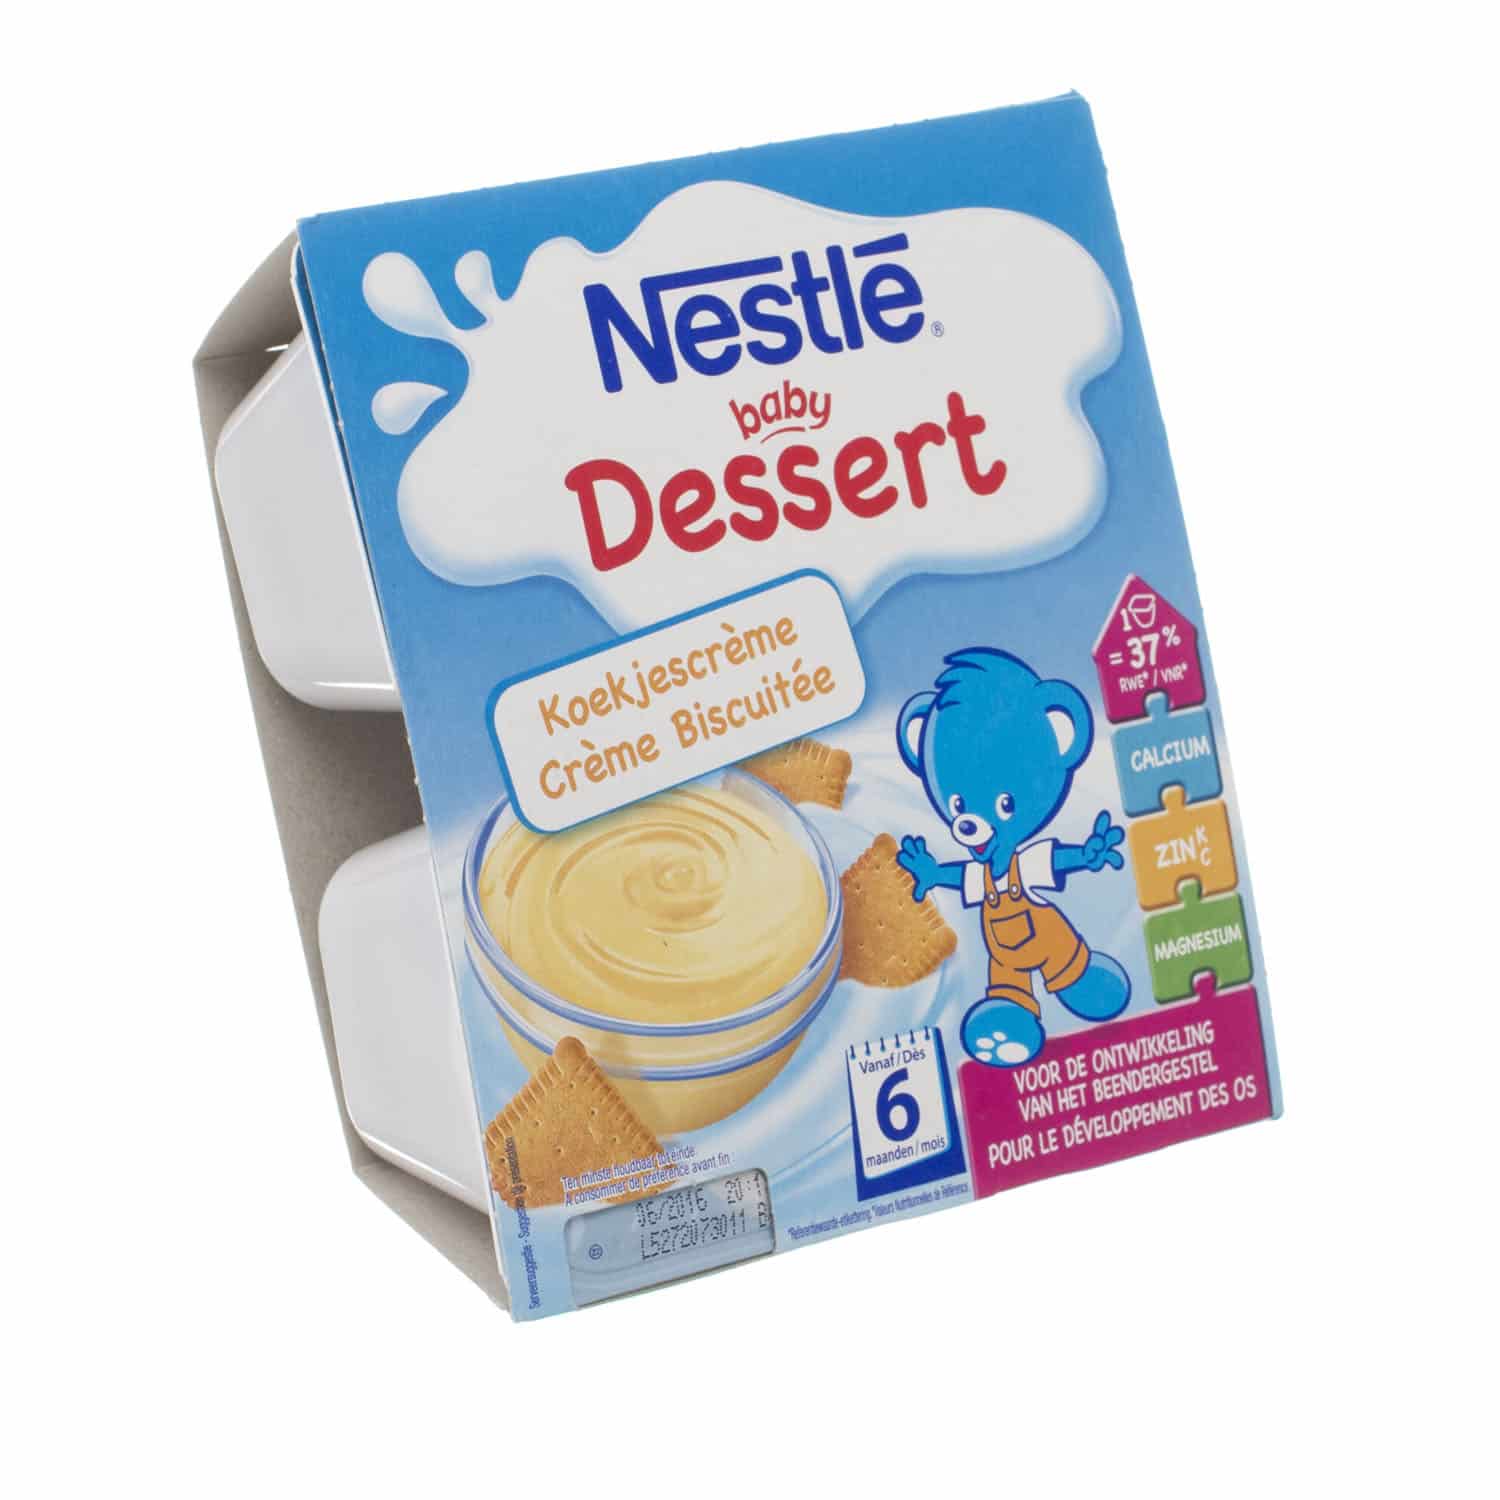 Nestlé Baby Dessert Koekjescrème